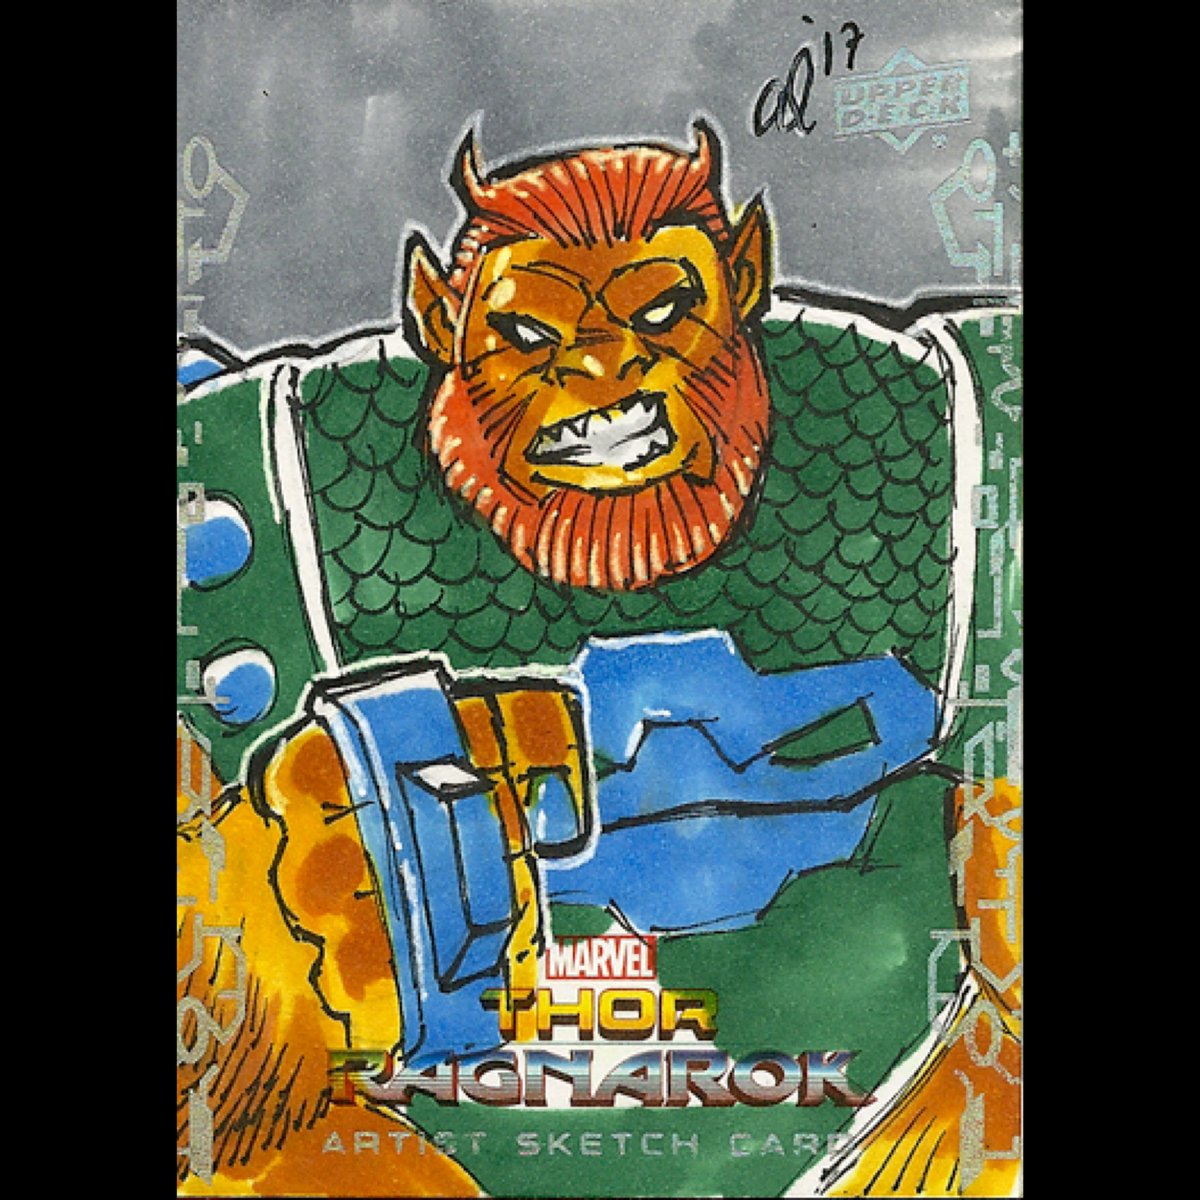 Ulik the Troll from Thor.  #ulik #thor #troll #norsemythology #norse #MarvelComics #Marvel #comics #comicart #comicartist #sketchcard #sketches #upperdeck @Marvel @thorofficial @UpperDeckEnt @ArTallks https://t.co/KSbmQEwVdH